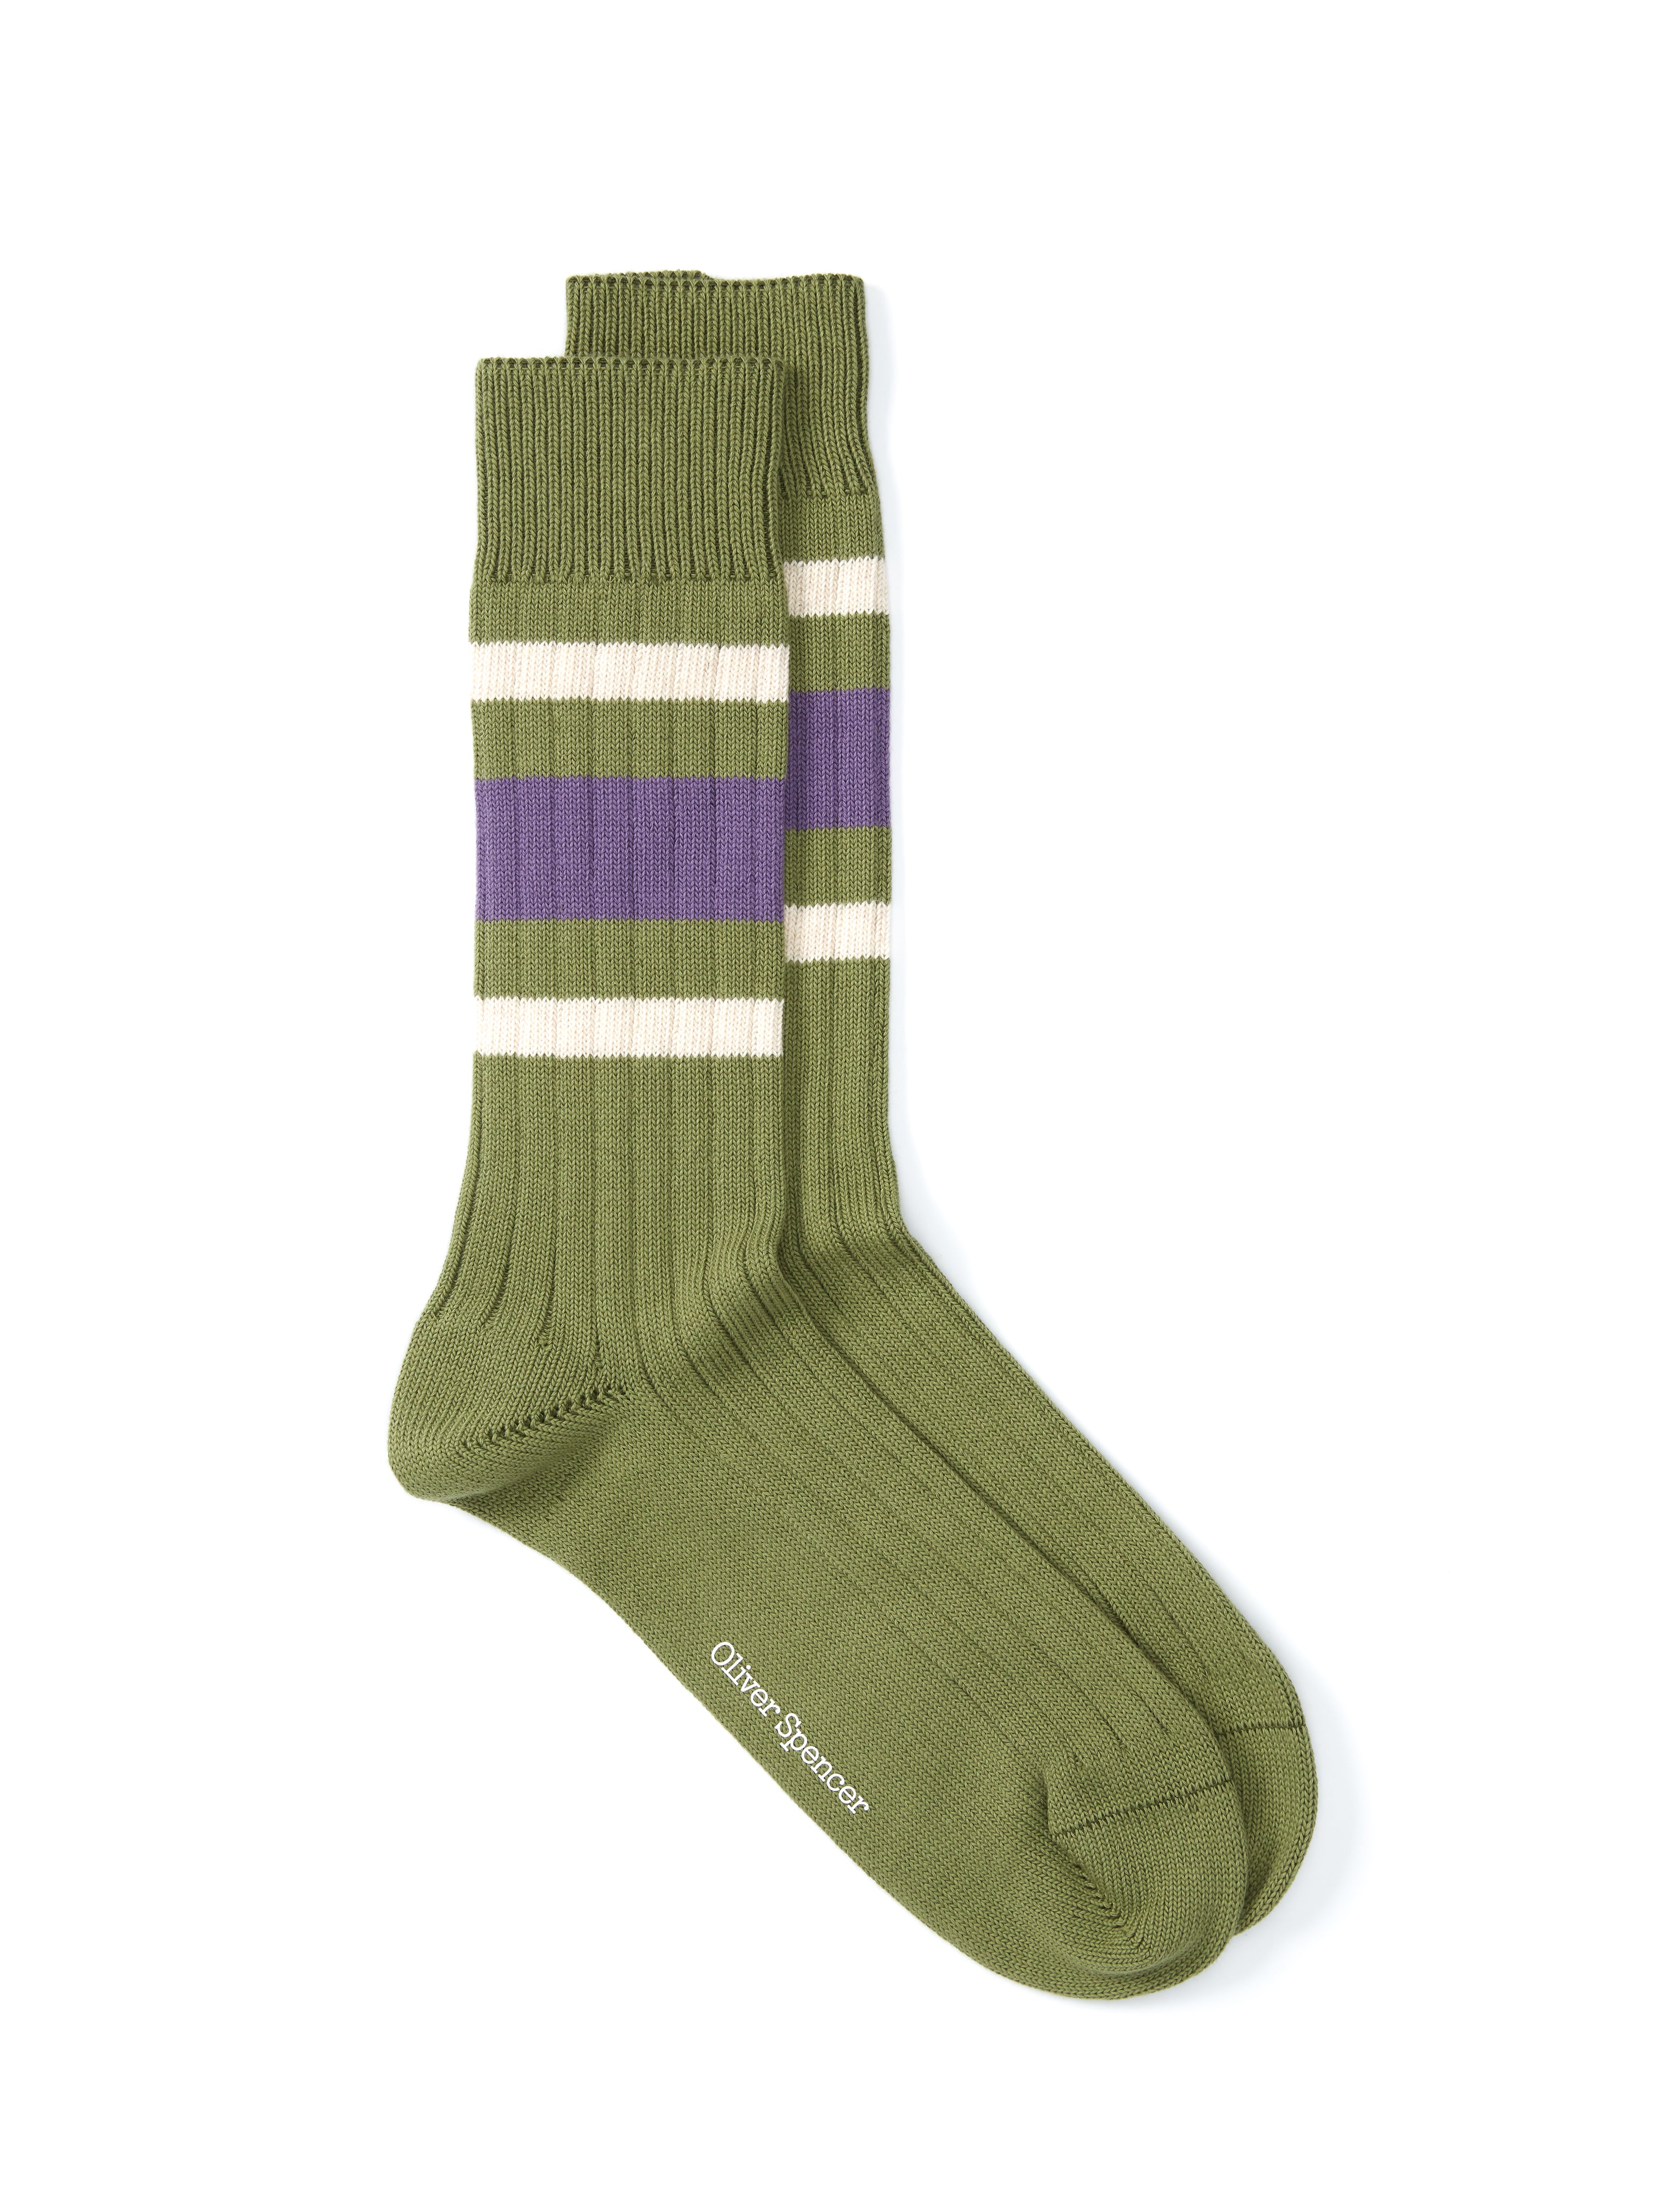 Polperro Socks Albion Green/Mauve